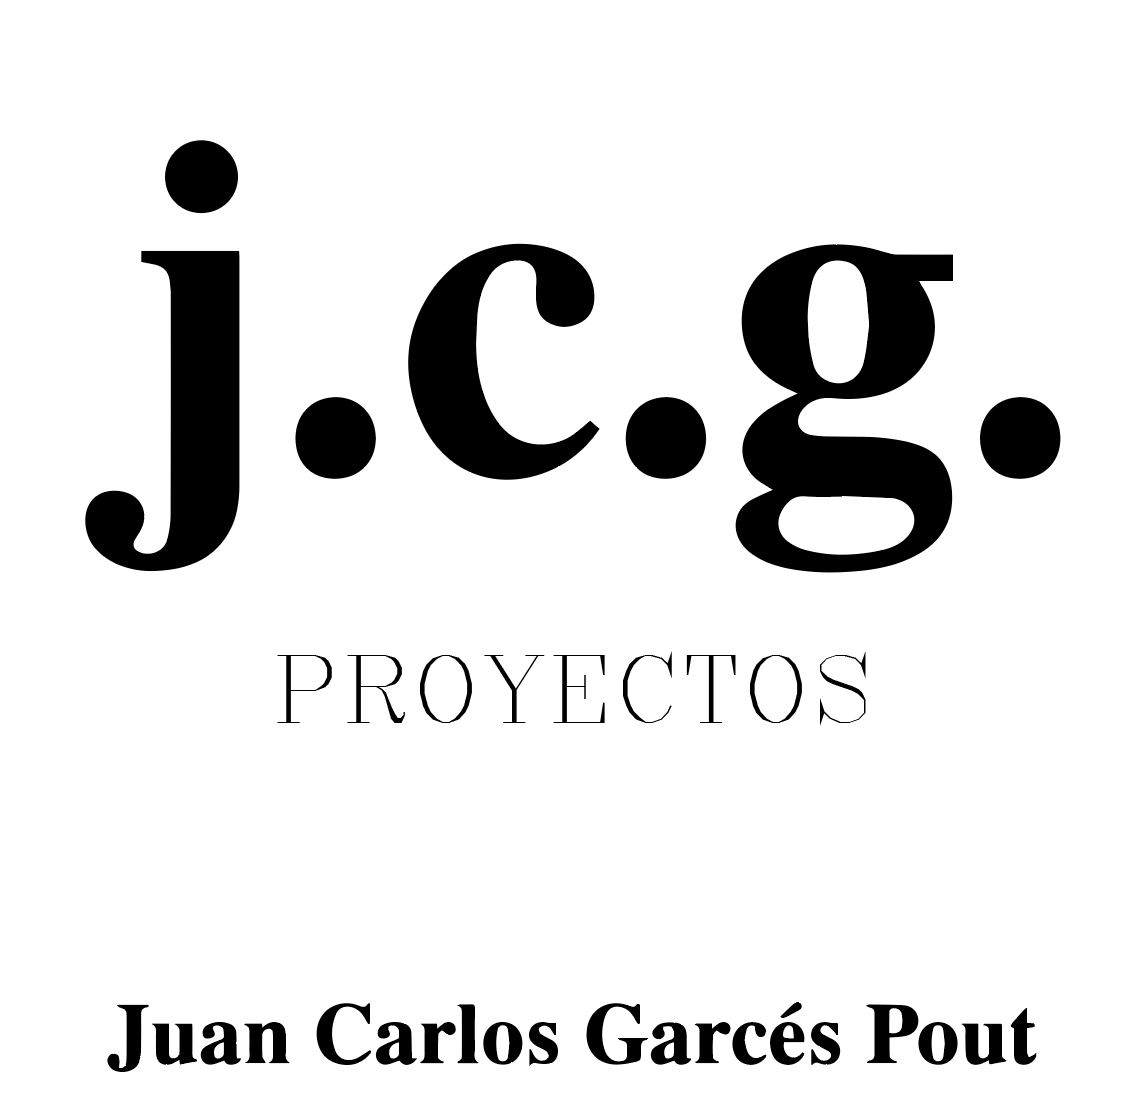 JUAN CARLOS GARCÉS POUT